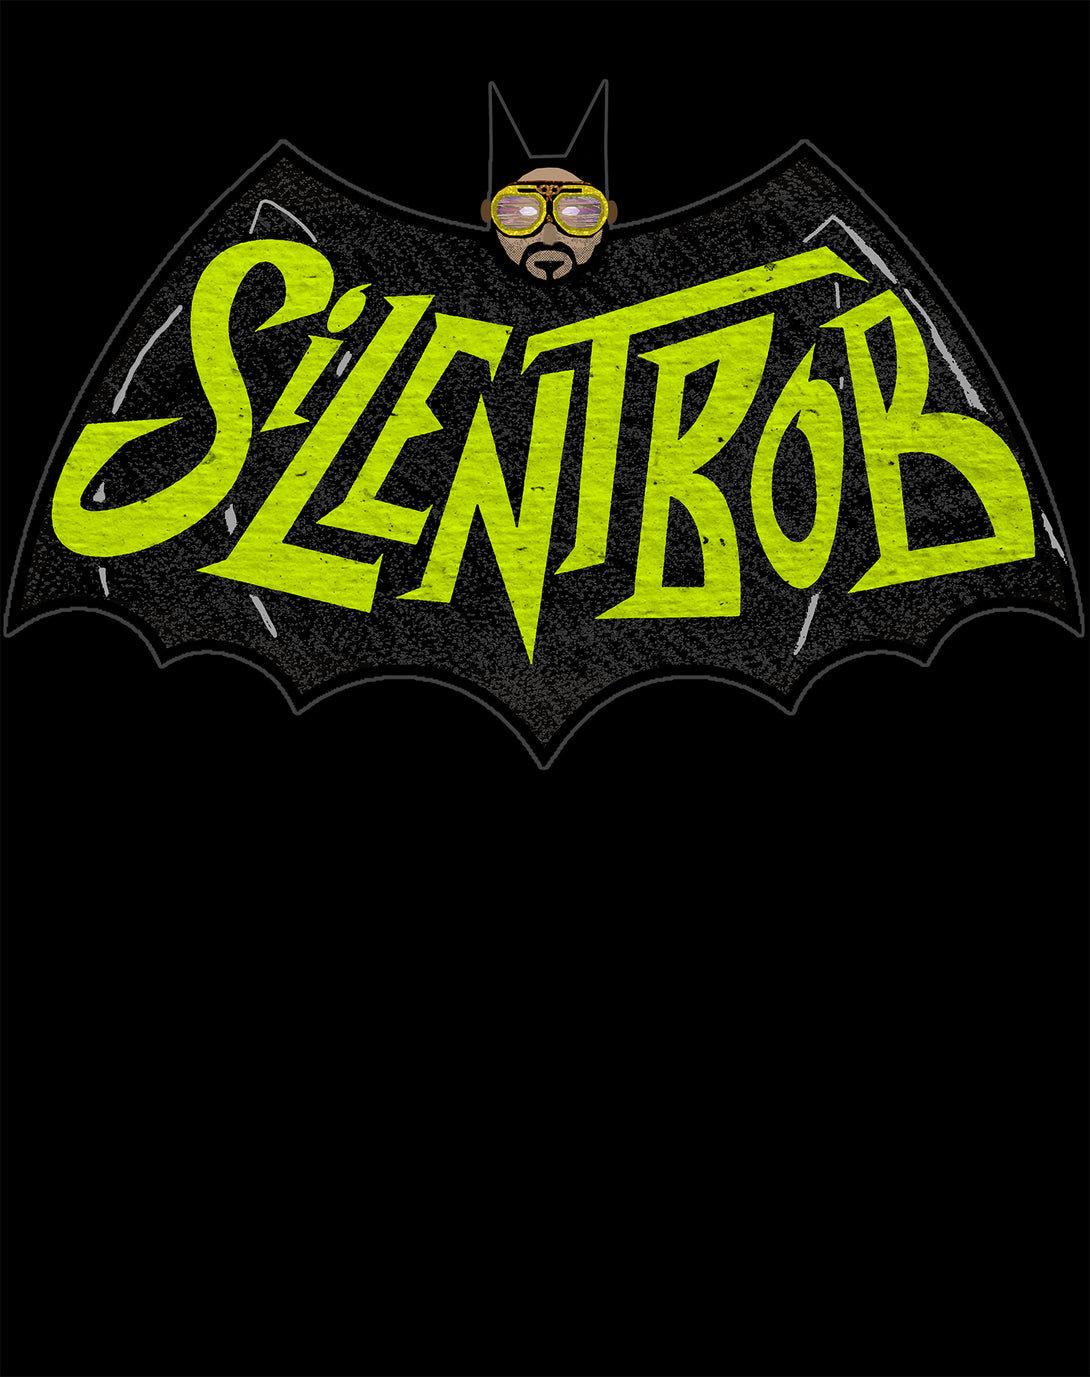 Kevin Smith View Askewniverse Logo Silent Bat Bob Official Women's T-Shirt Black - Urban Species Design Close Up